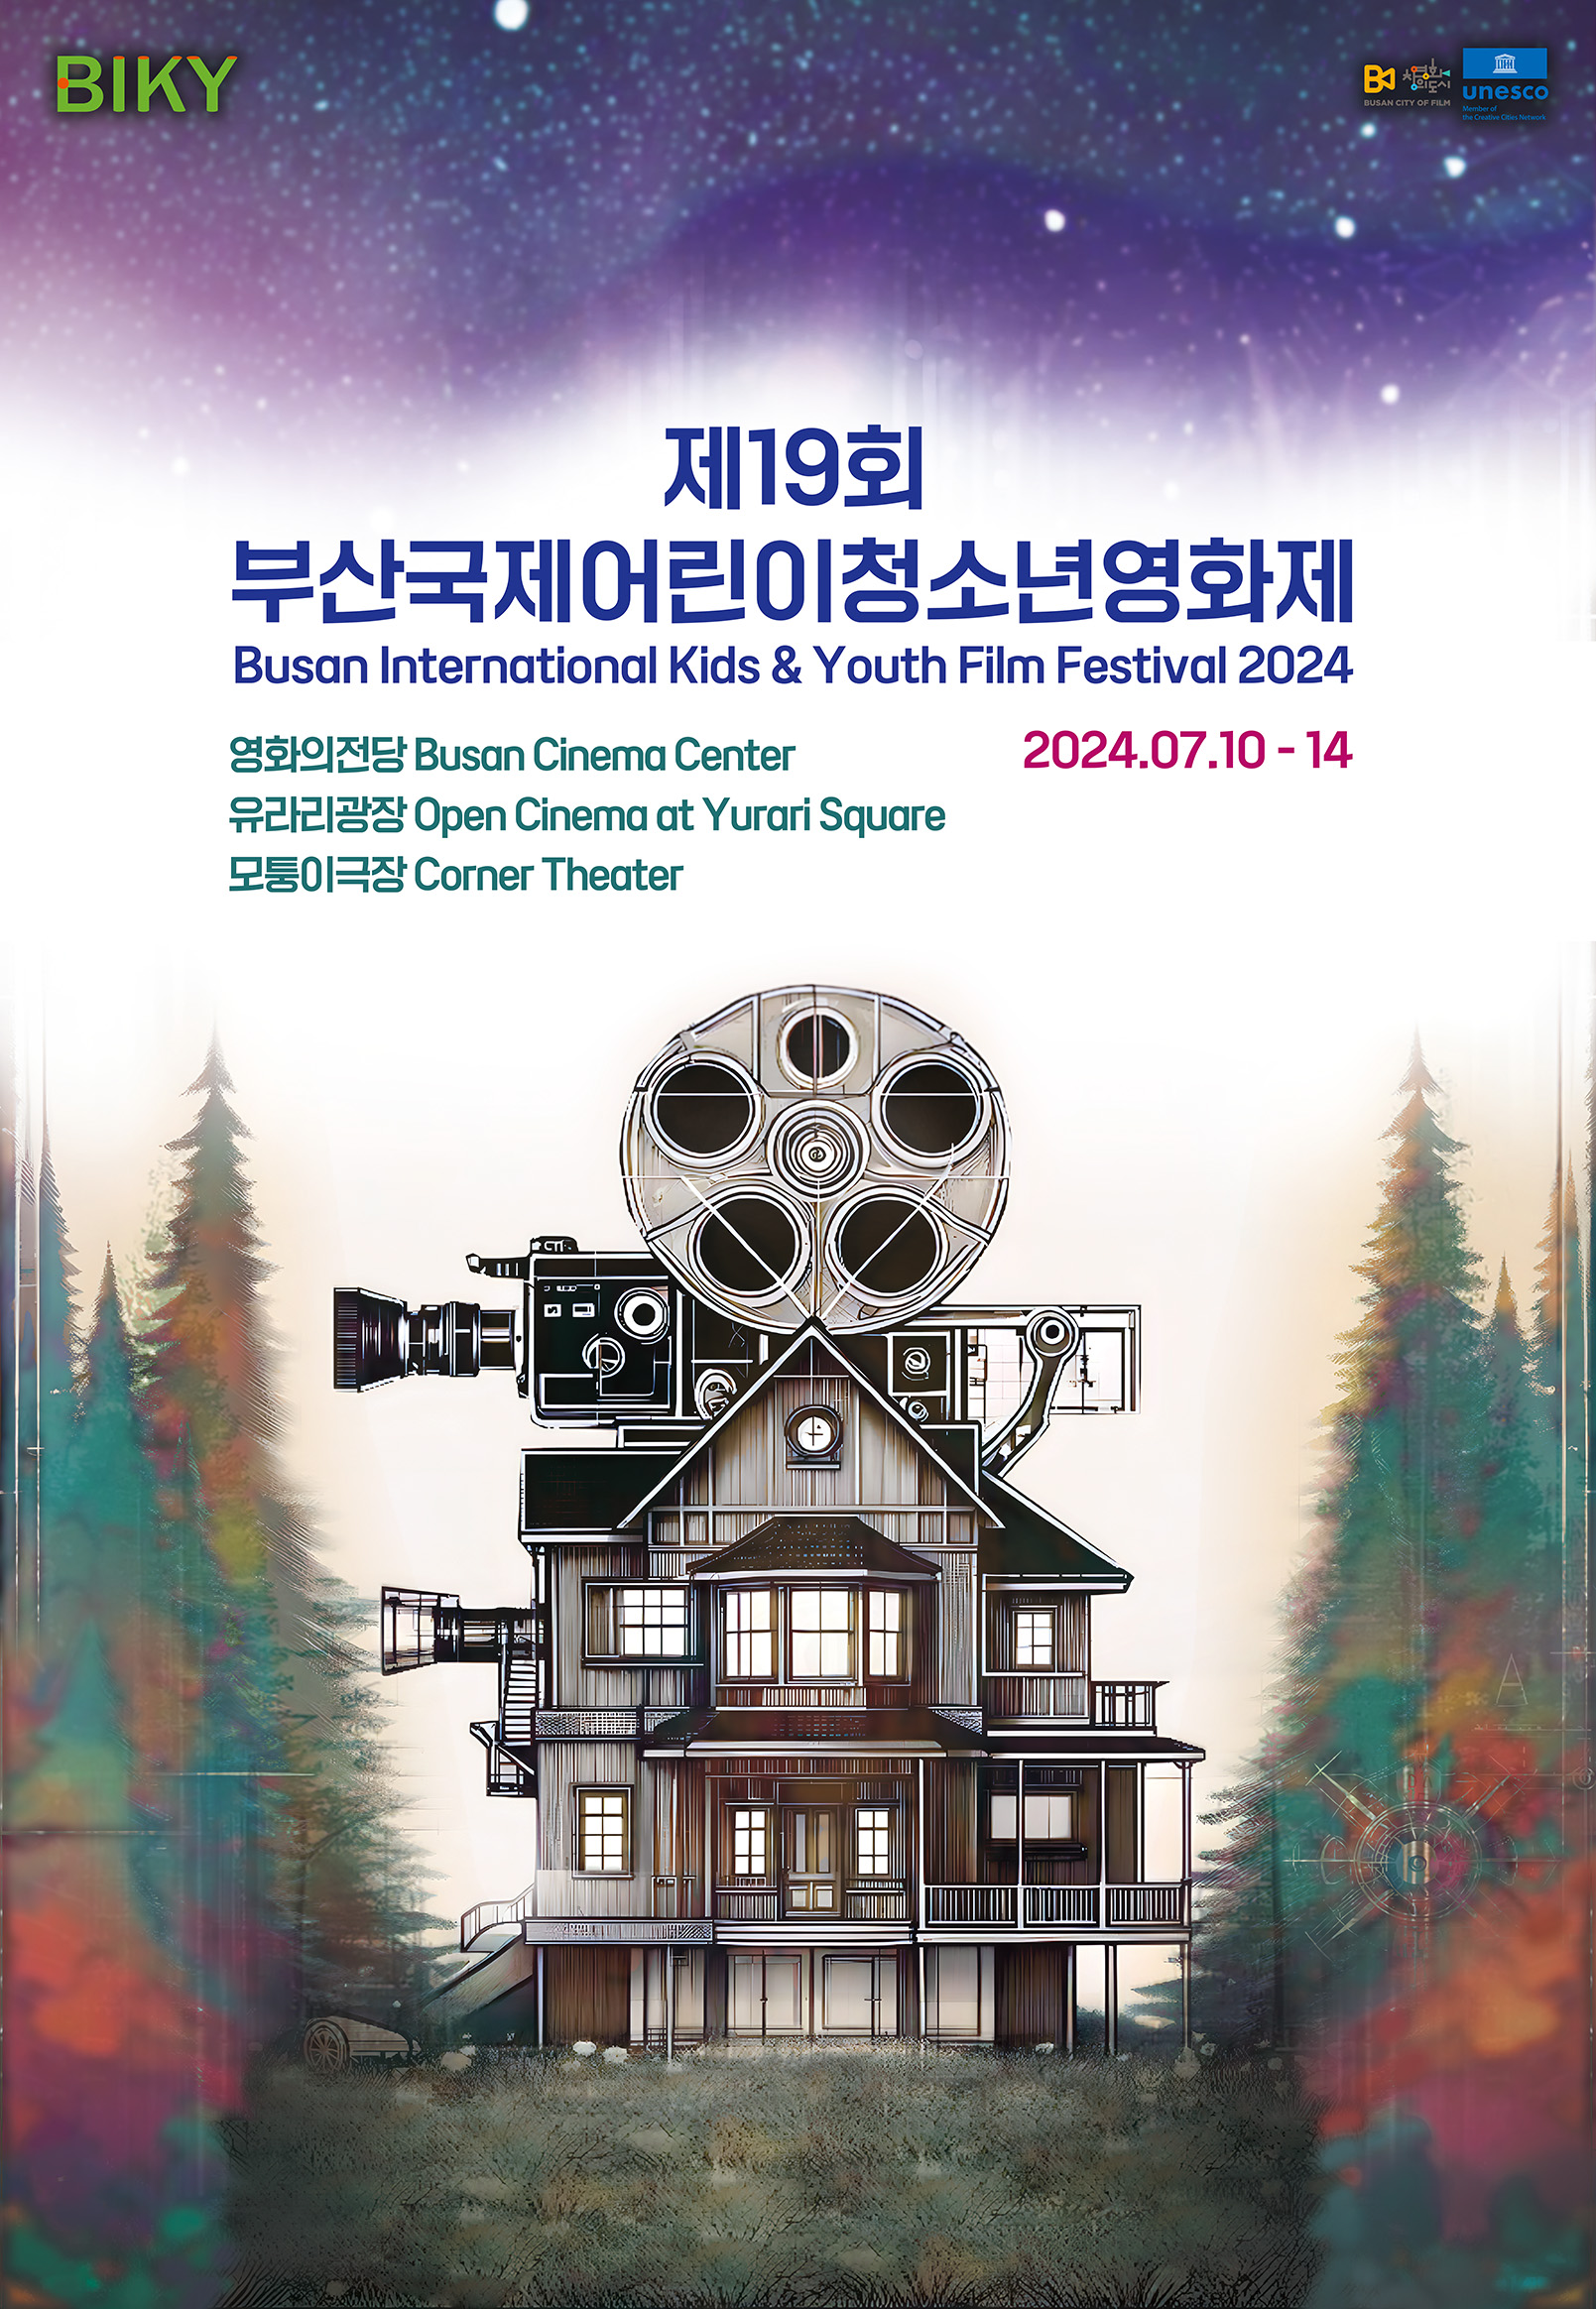 The 19th Busan International Kids & Youth Film Festival